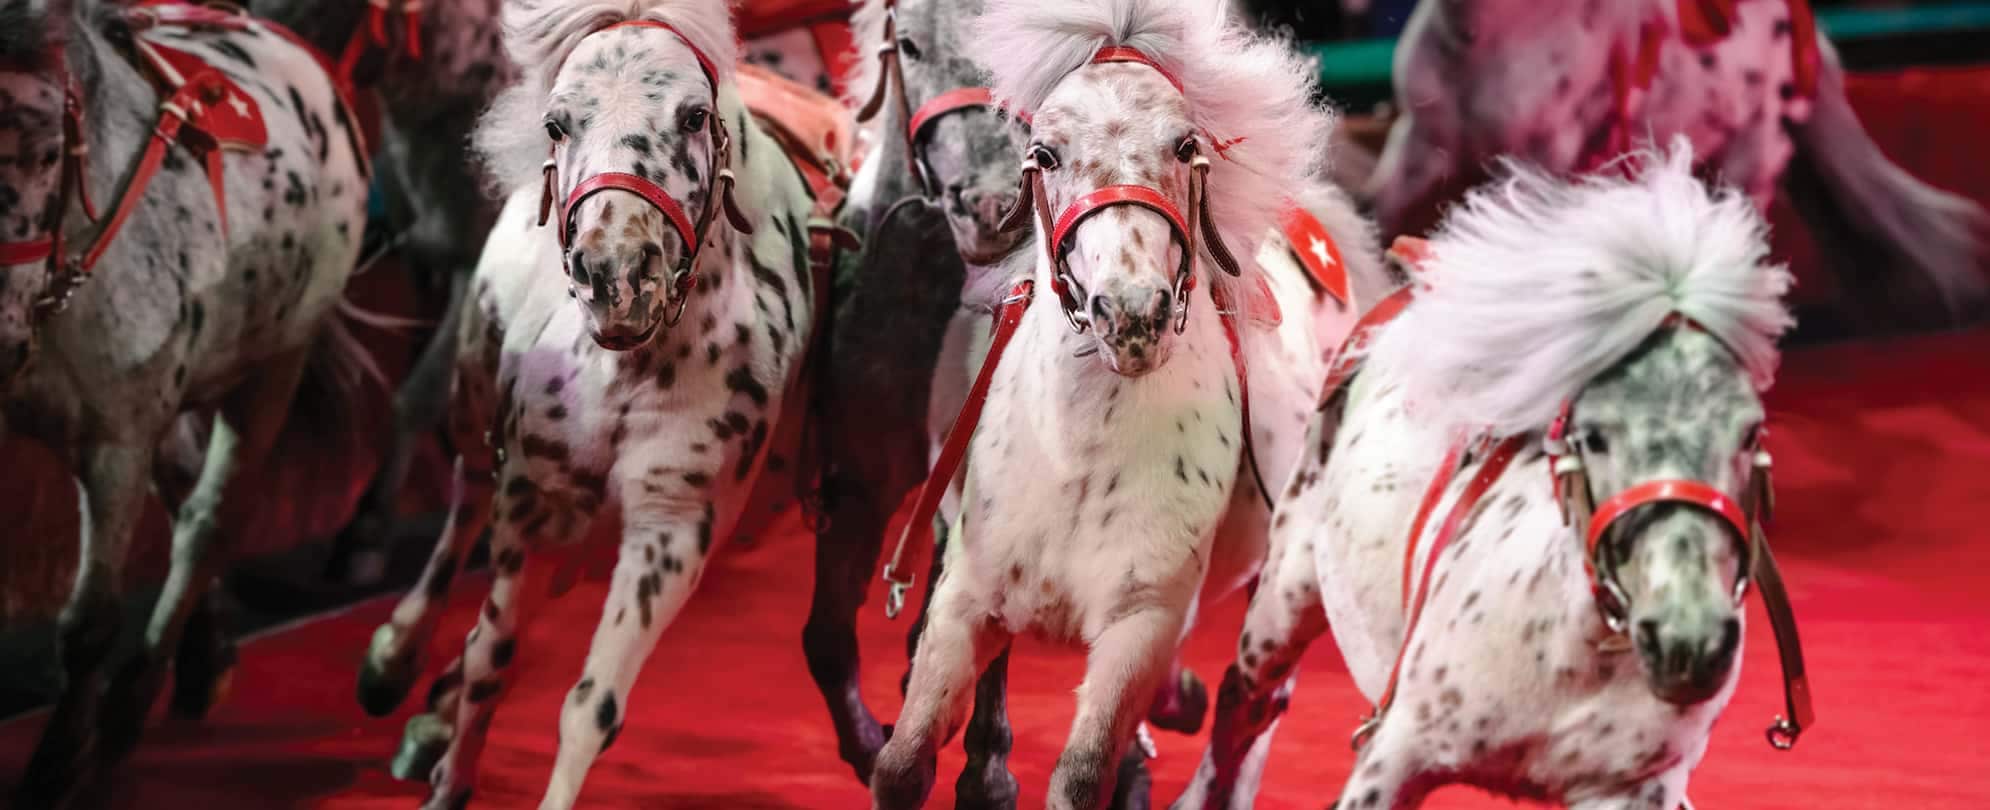 A herd of circus ponies in Branson, Missouri.